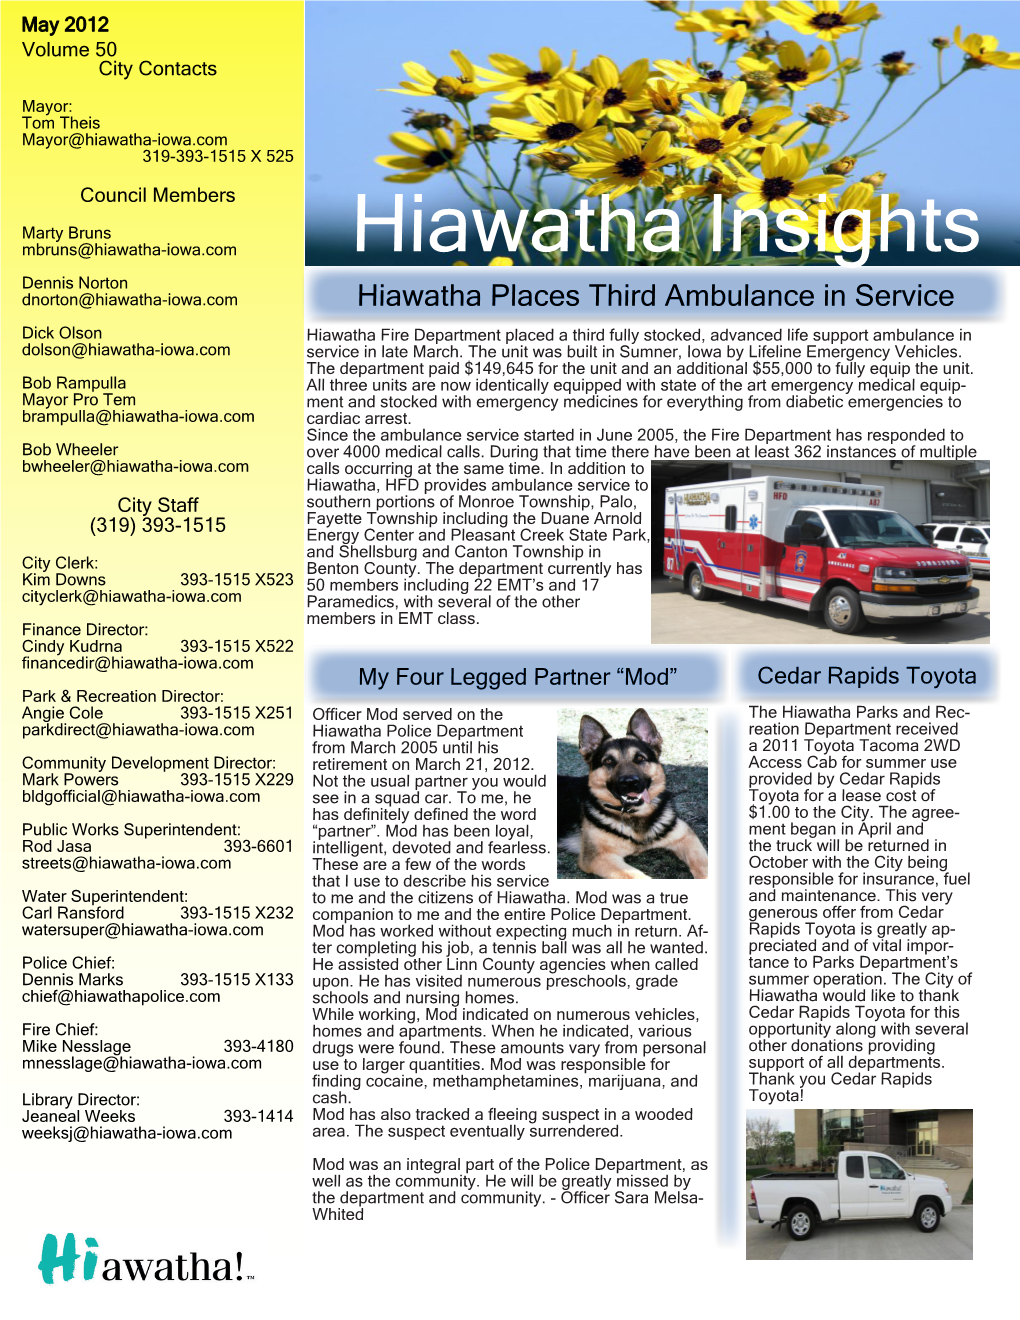 Hiawatha Insights